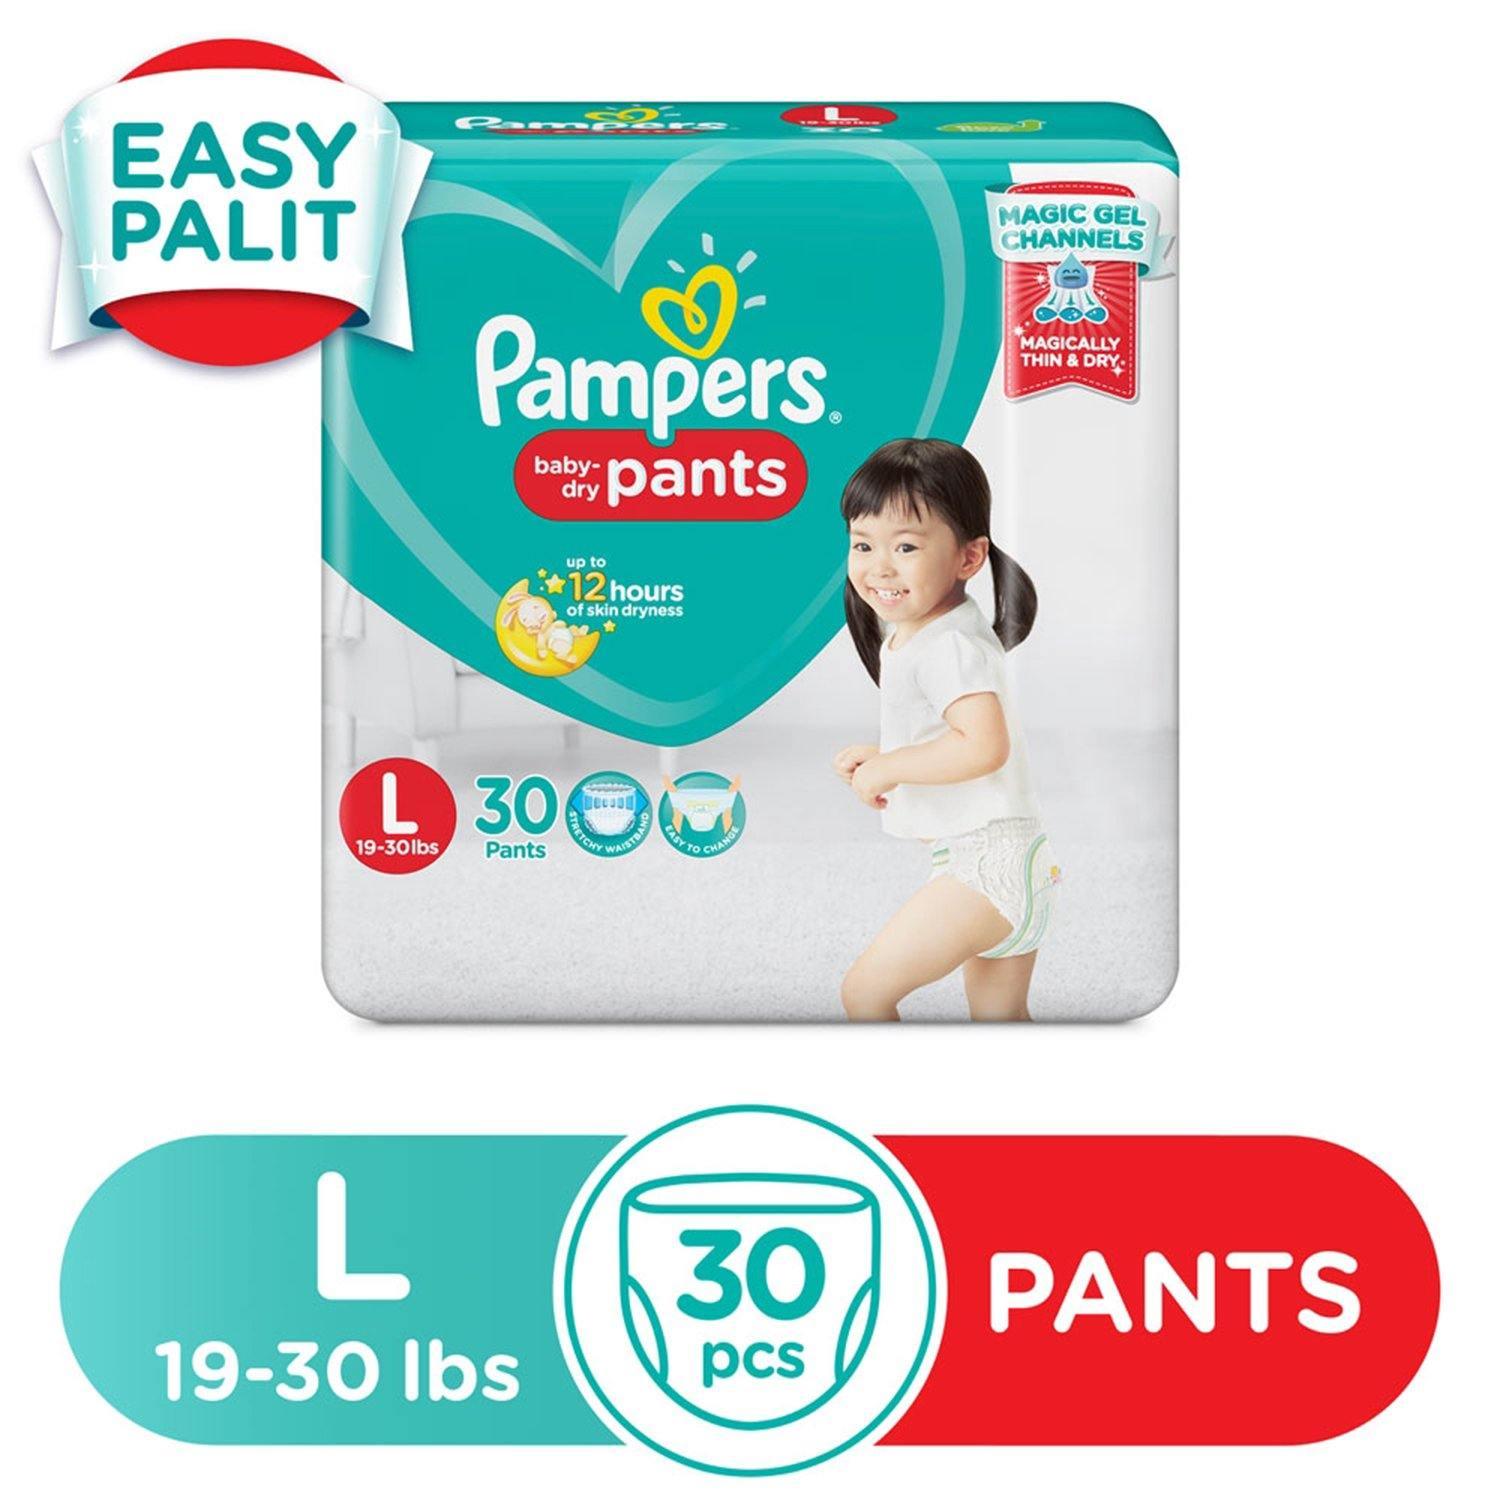 Buy Pampers Baby Dry Diaper Pants XXXL- 22s Online | Southstar Drug